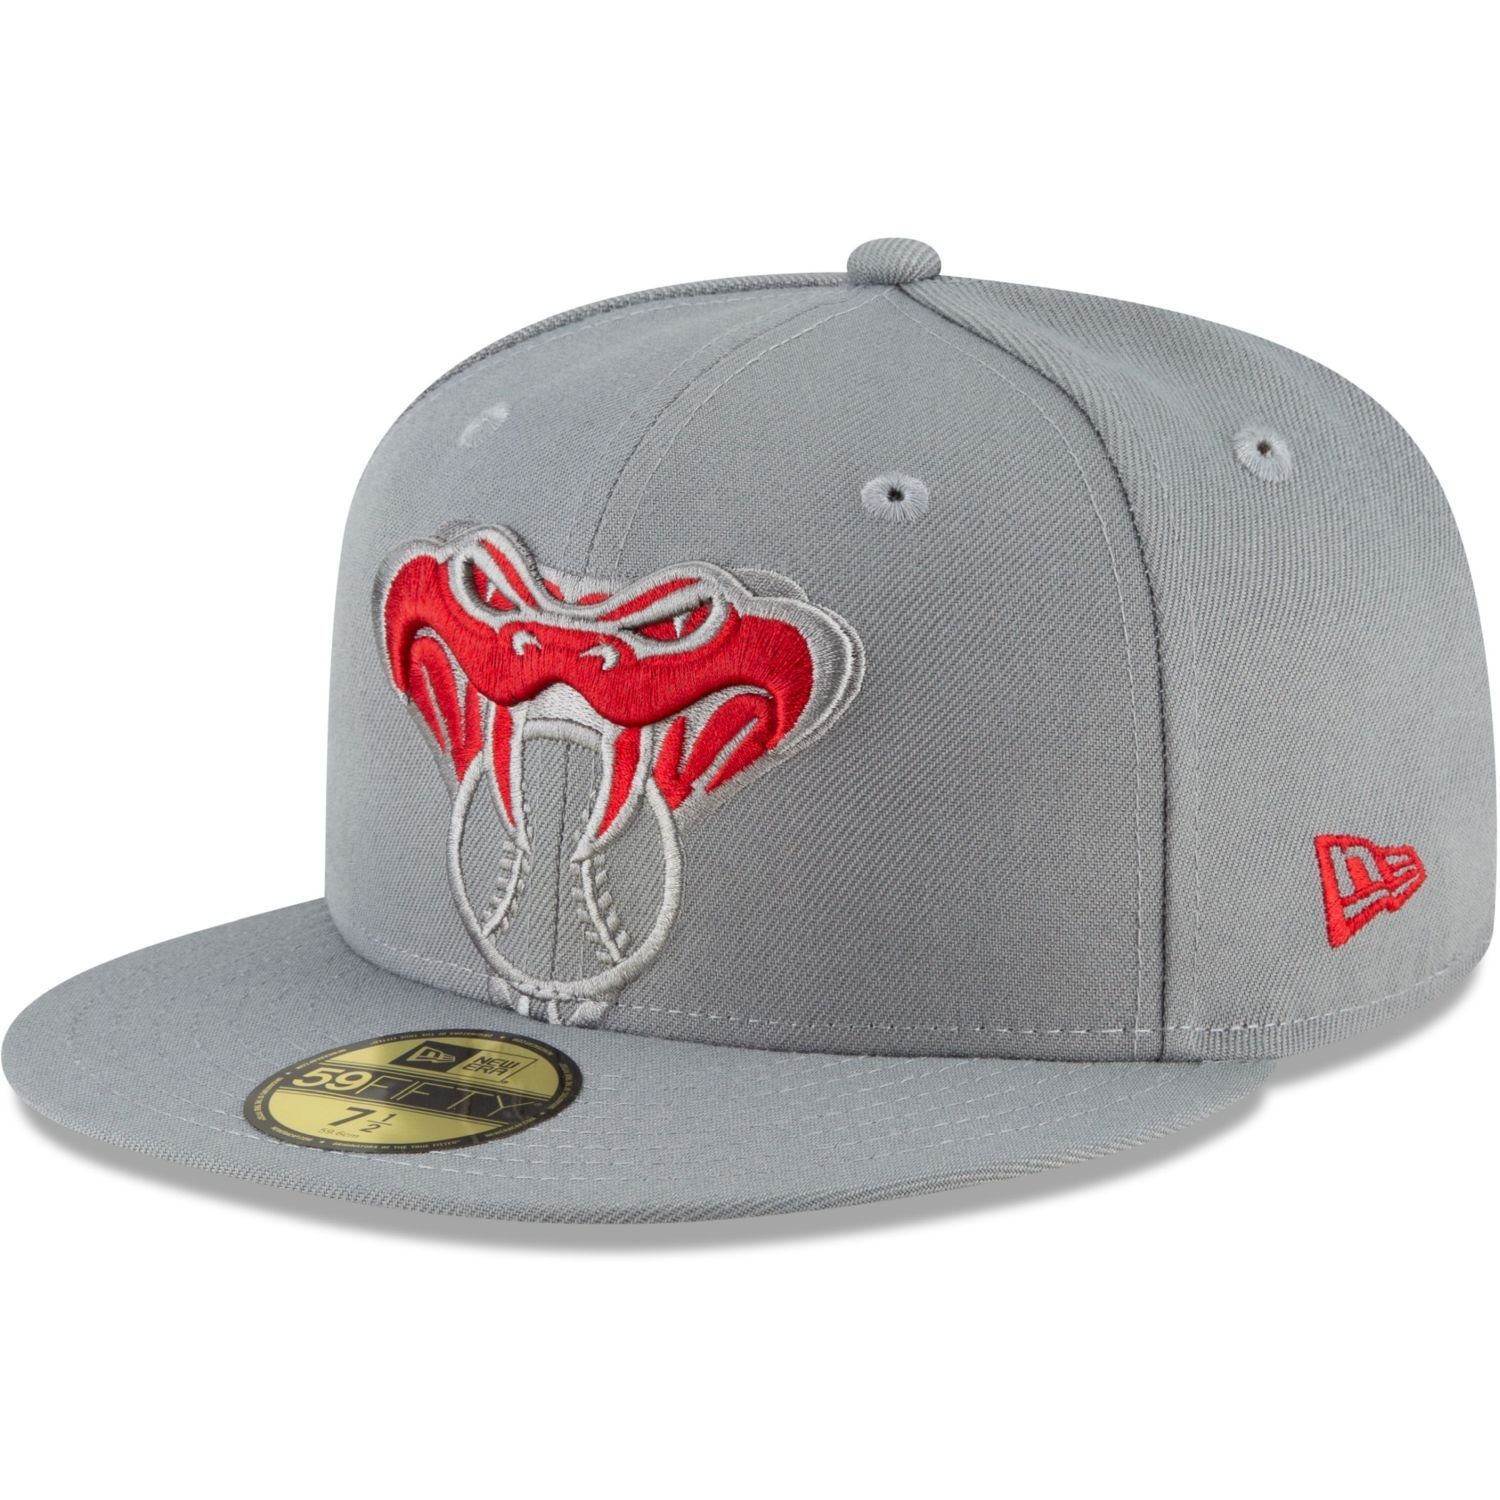 New Era Fitted Cap 59Fifty STORM GREY MLB Cooperstown Team Arizona Diamondbacks